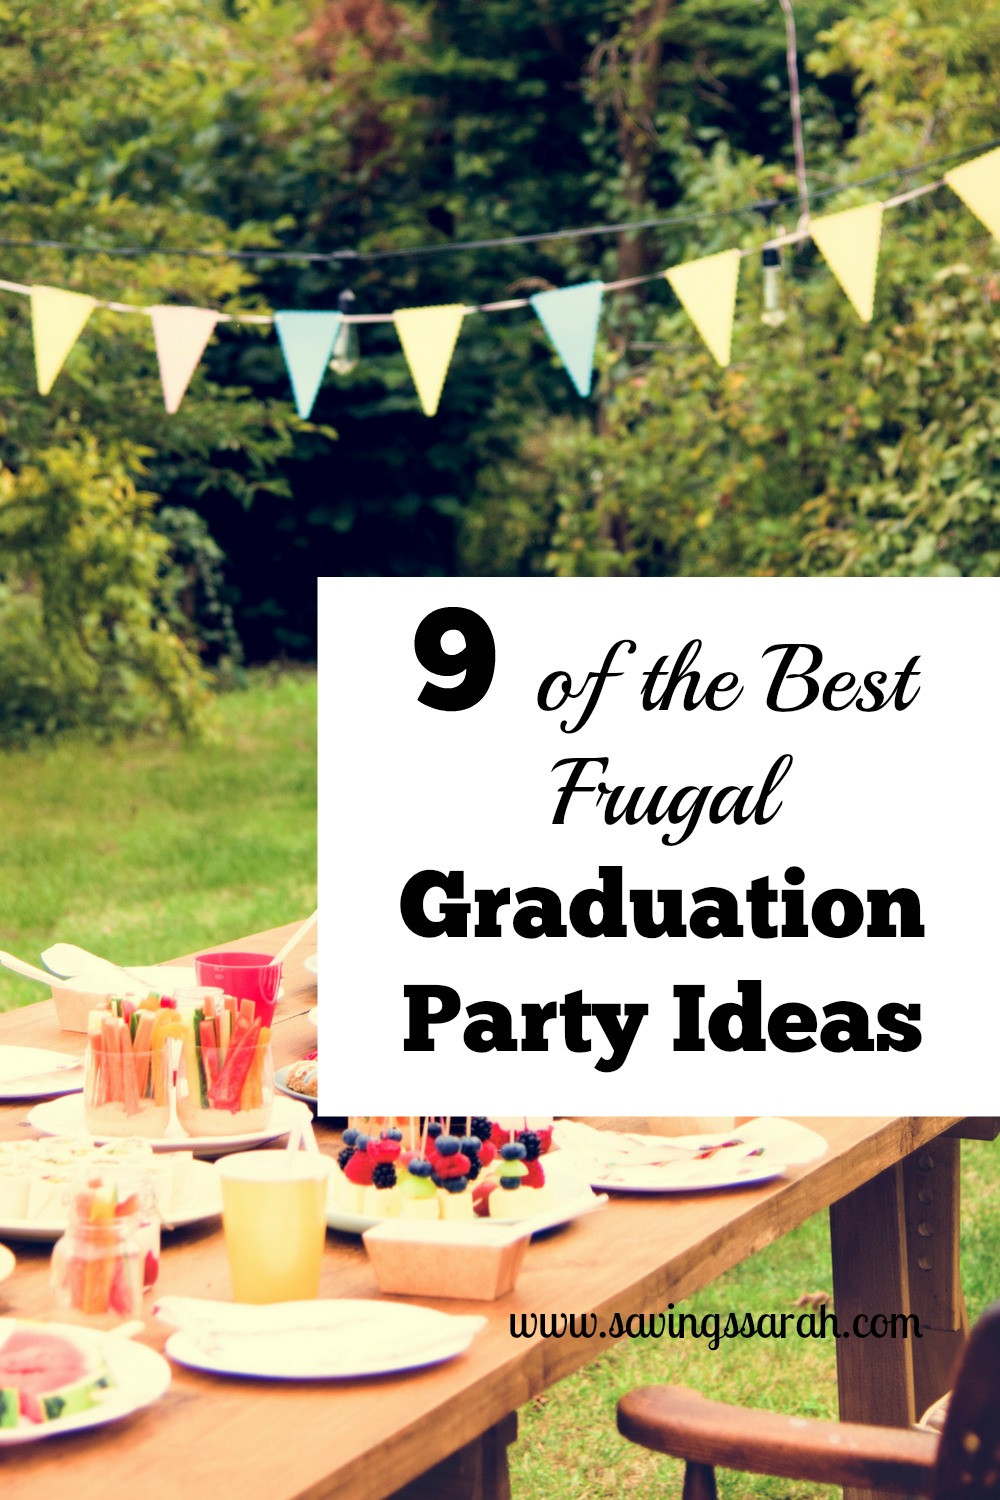 Food Ideas For High School Graduation Party
 9 the Best Frugal Graduation Party Ideas Earning and